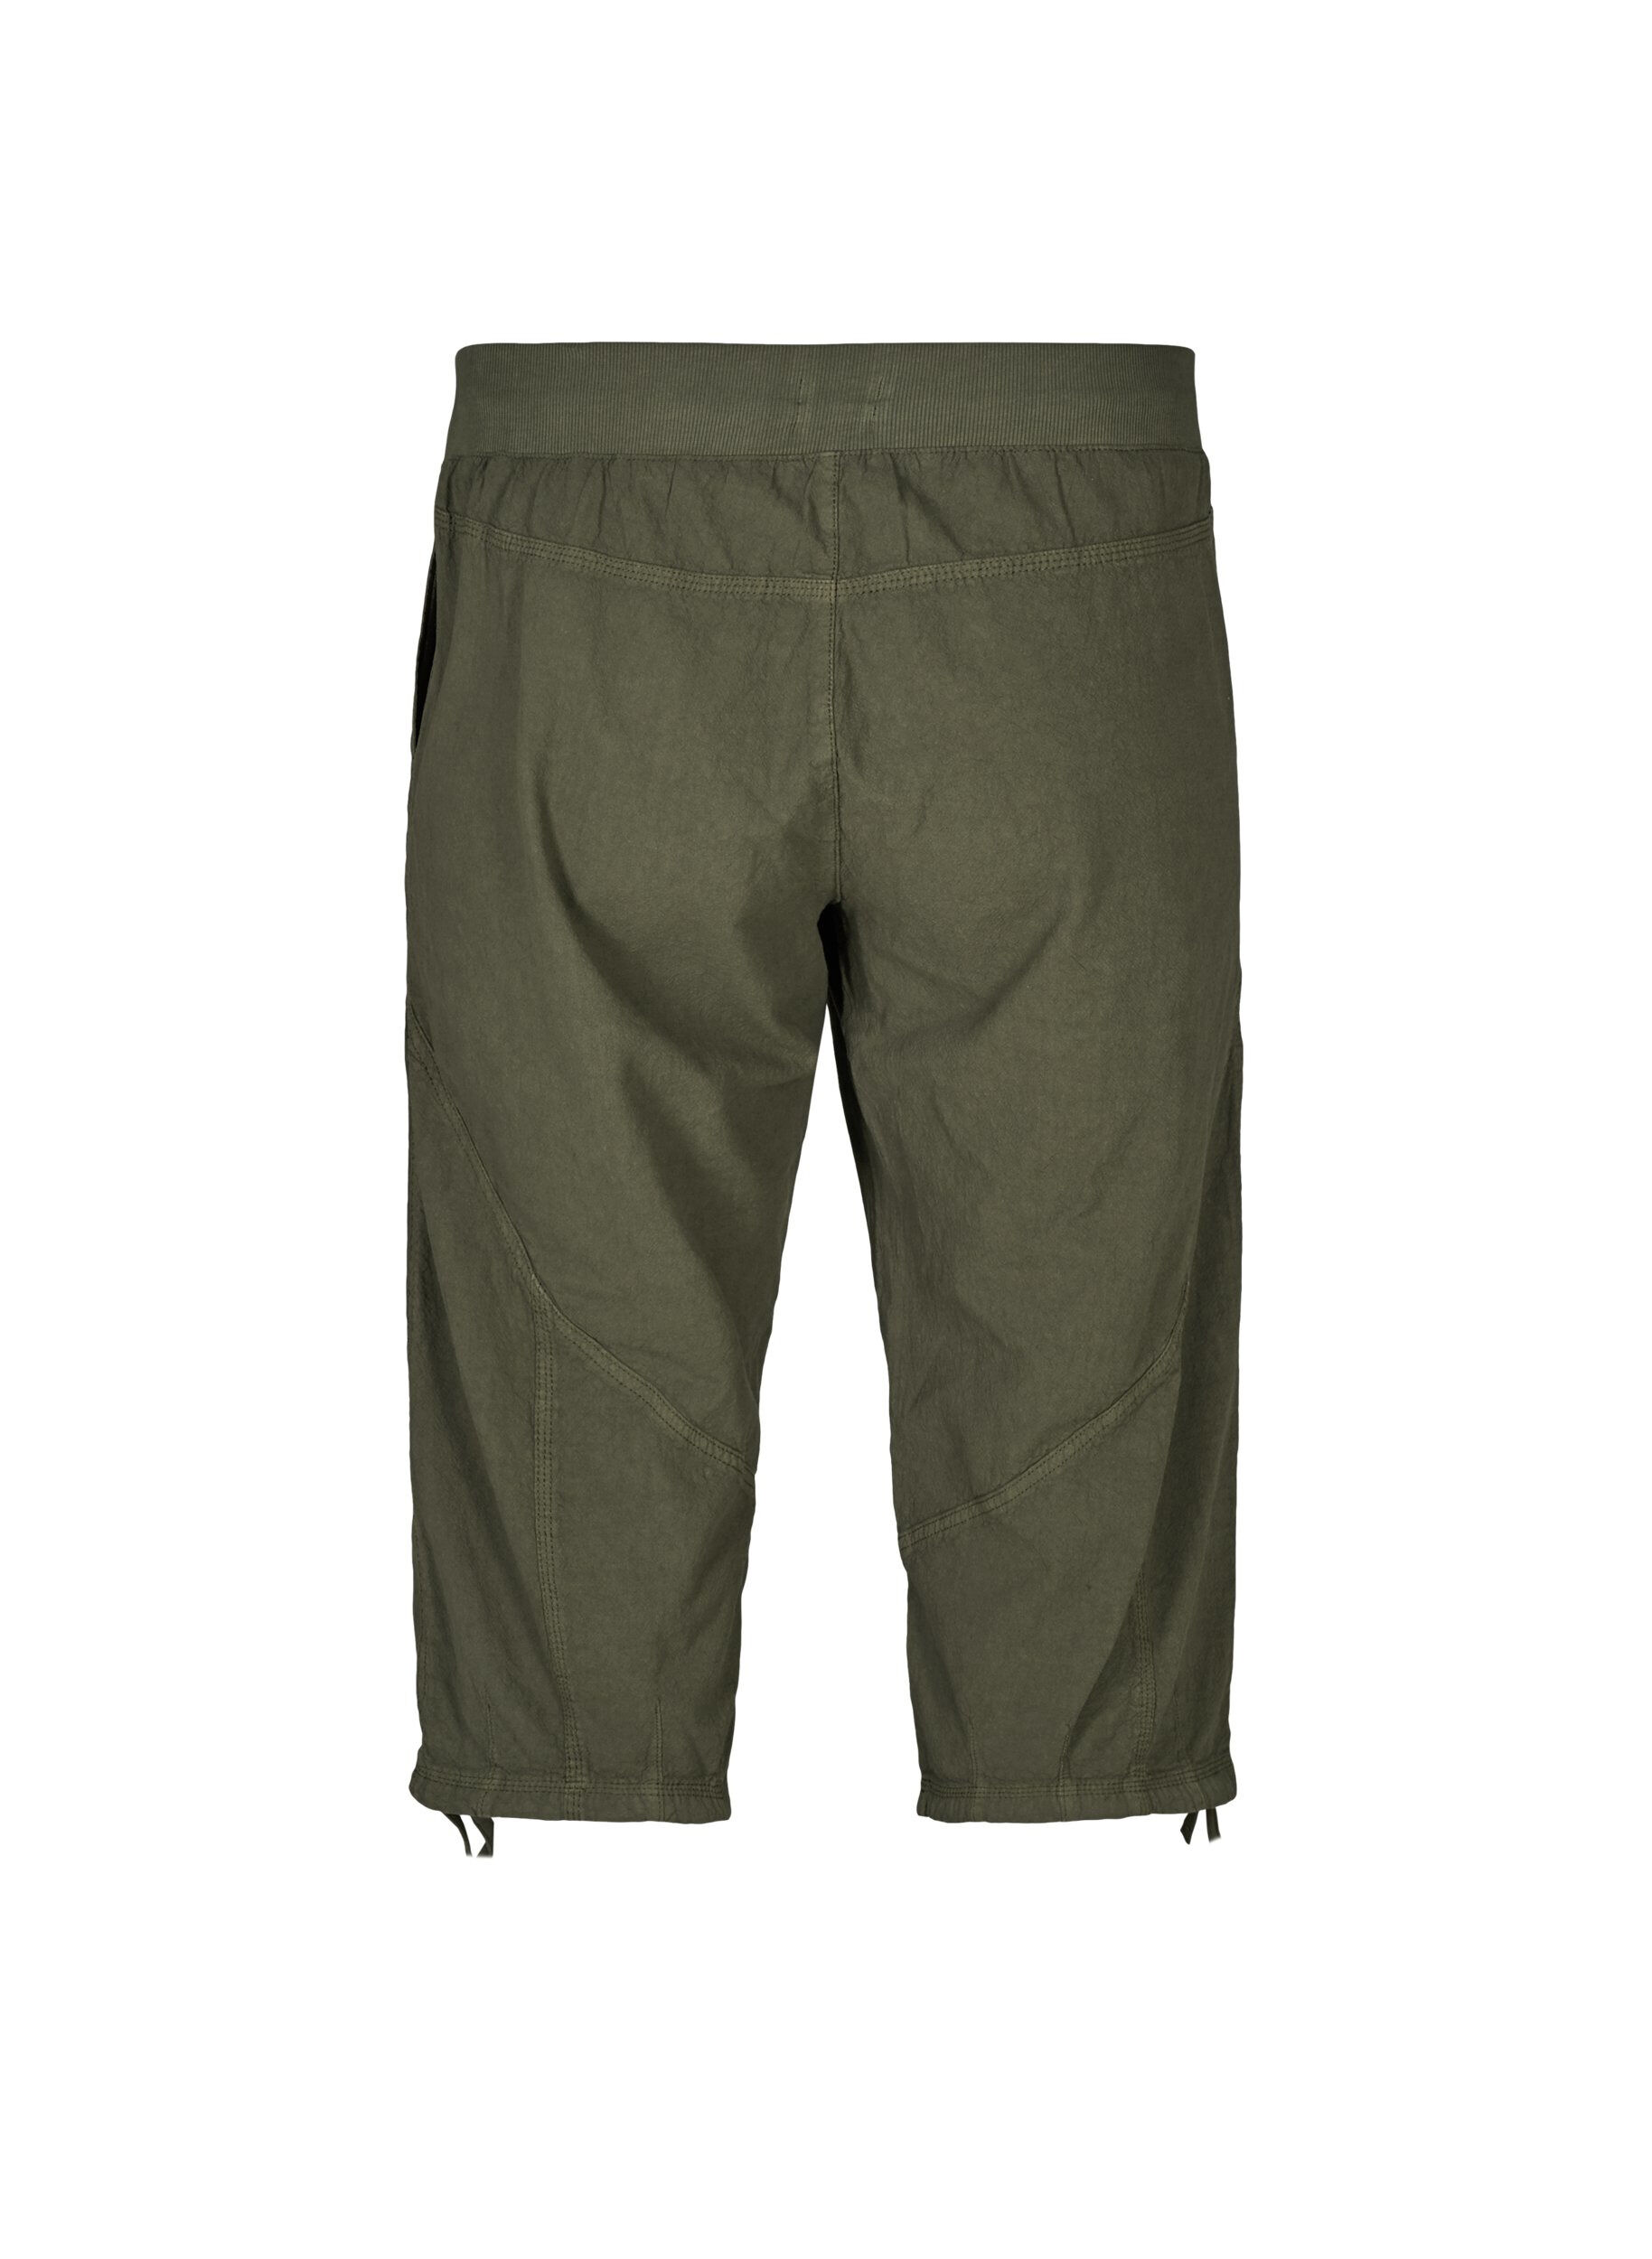 EKLENTSON Mens Capri Pants Cotton Linen Lightweight Loose 3/4 Long Shorts  Below Knee White Casual Beach Yoga Pants, Beige, 32 at Amazon Men's  Clothing store